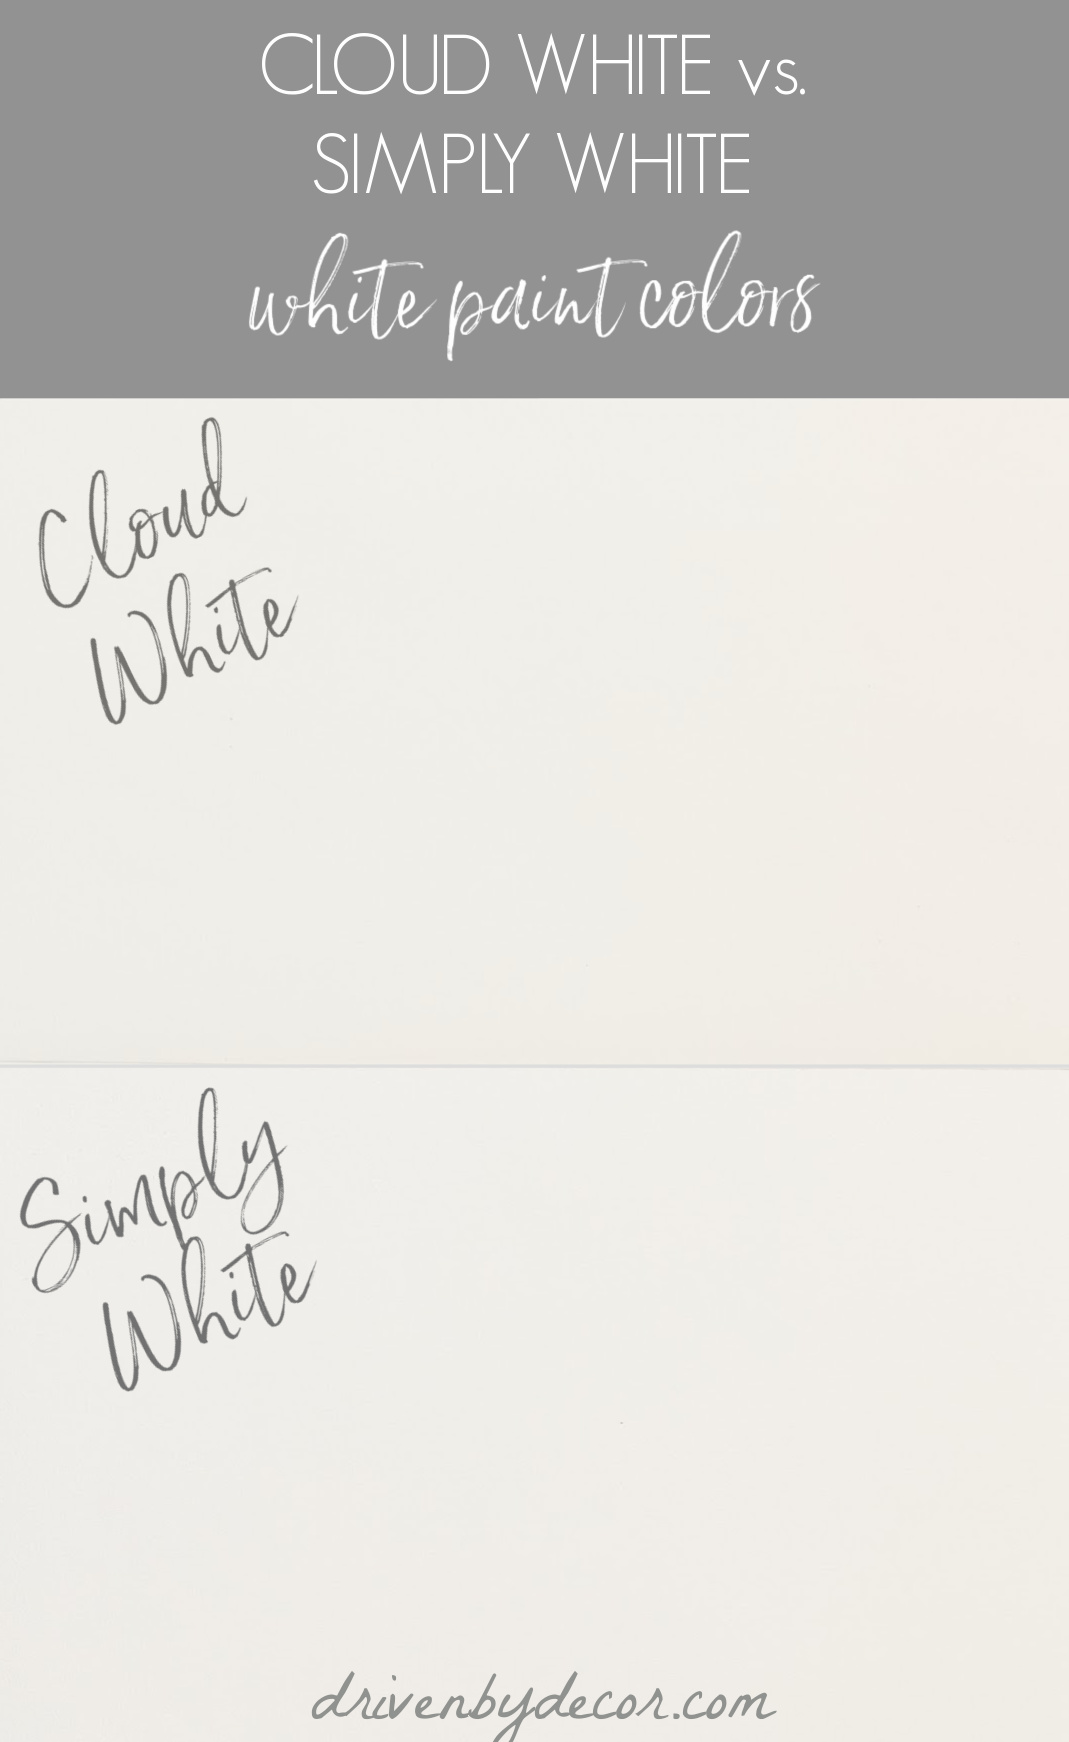 https://www.drivenbydecor.com/wp-content/uploads/2021/04/cloud-white-vs-simply-white.jpg